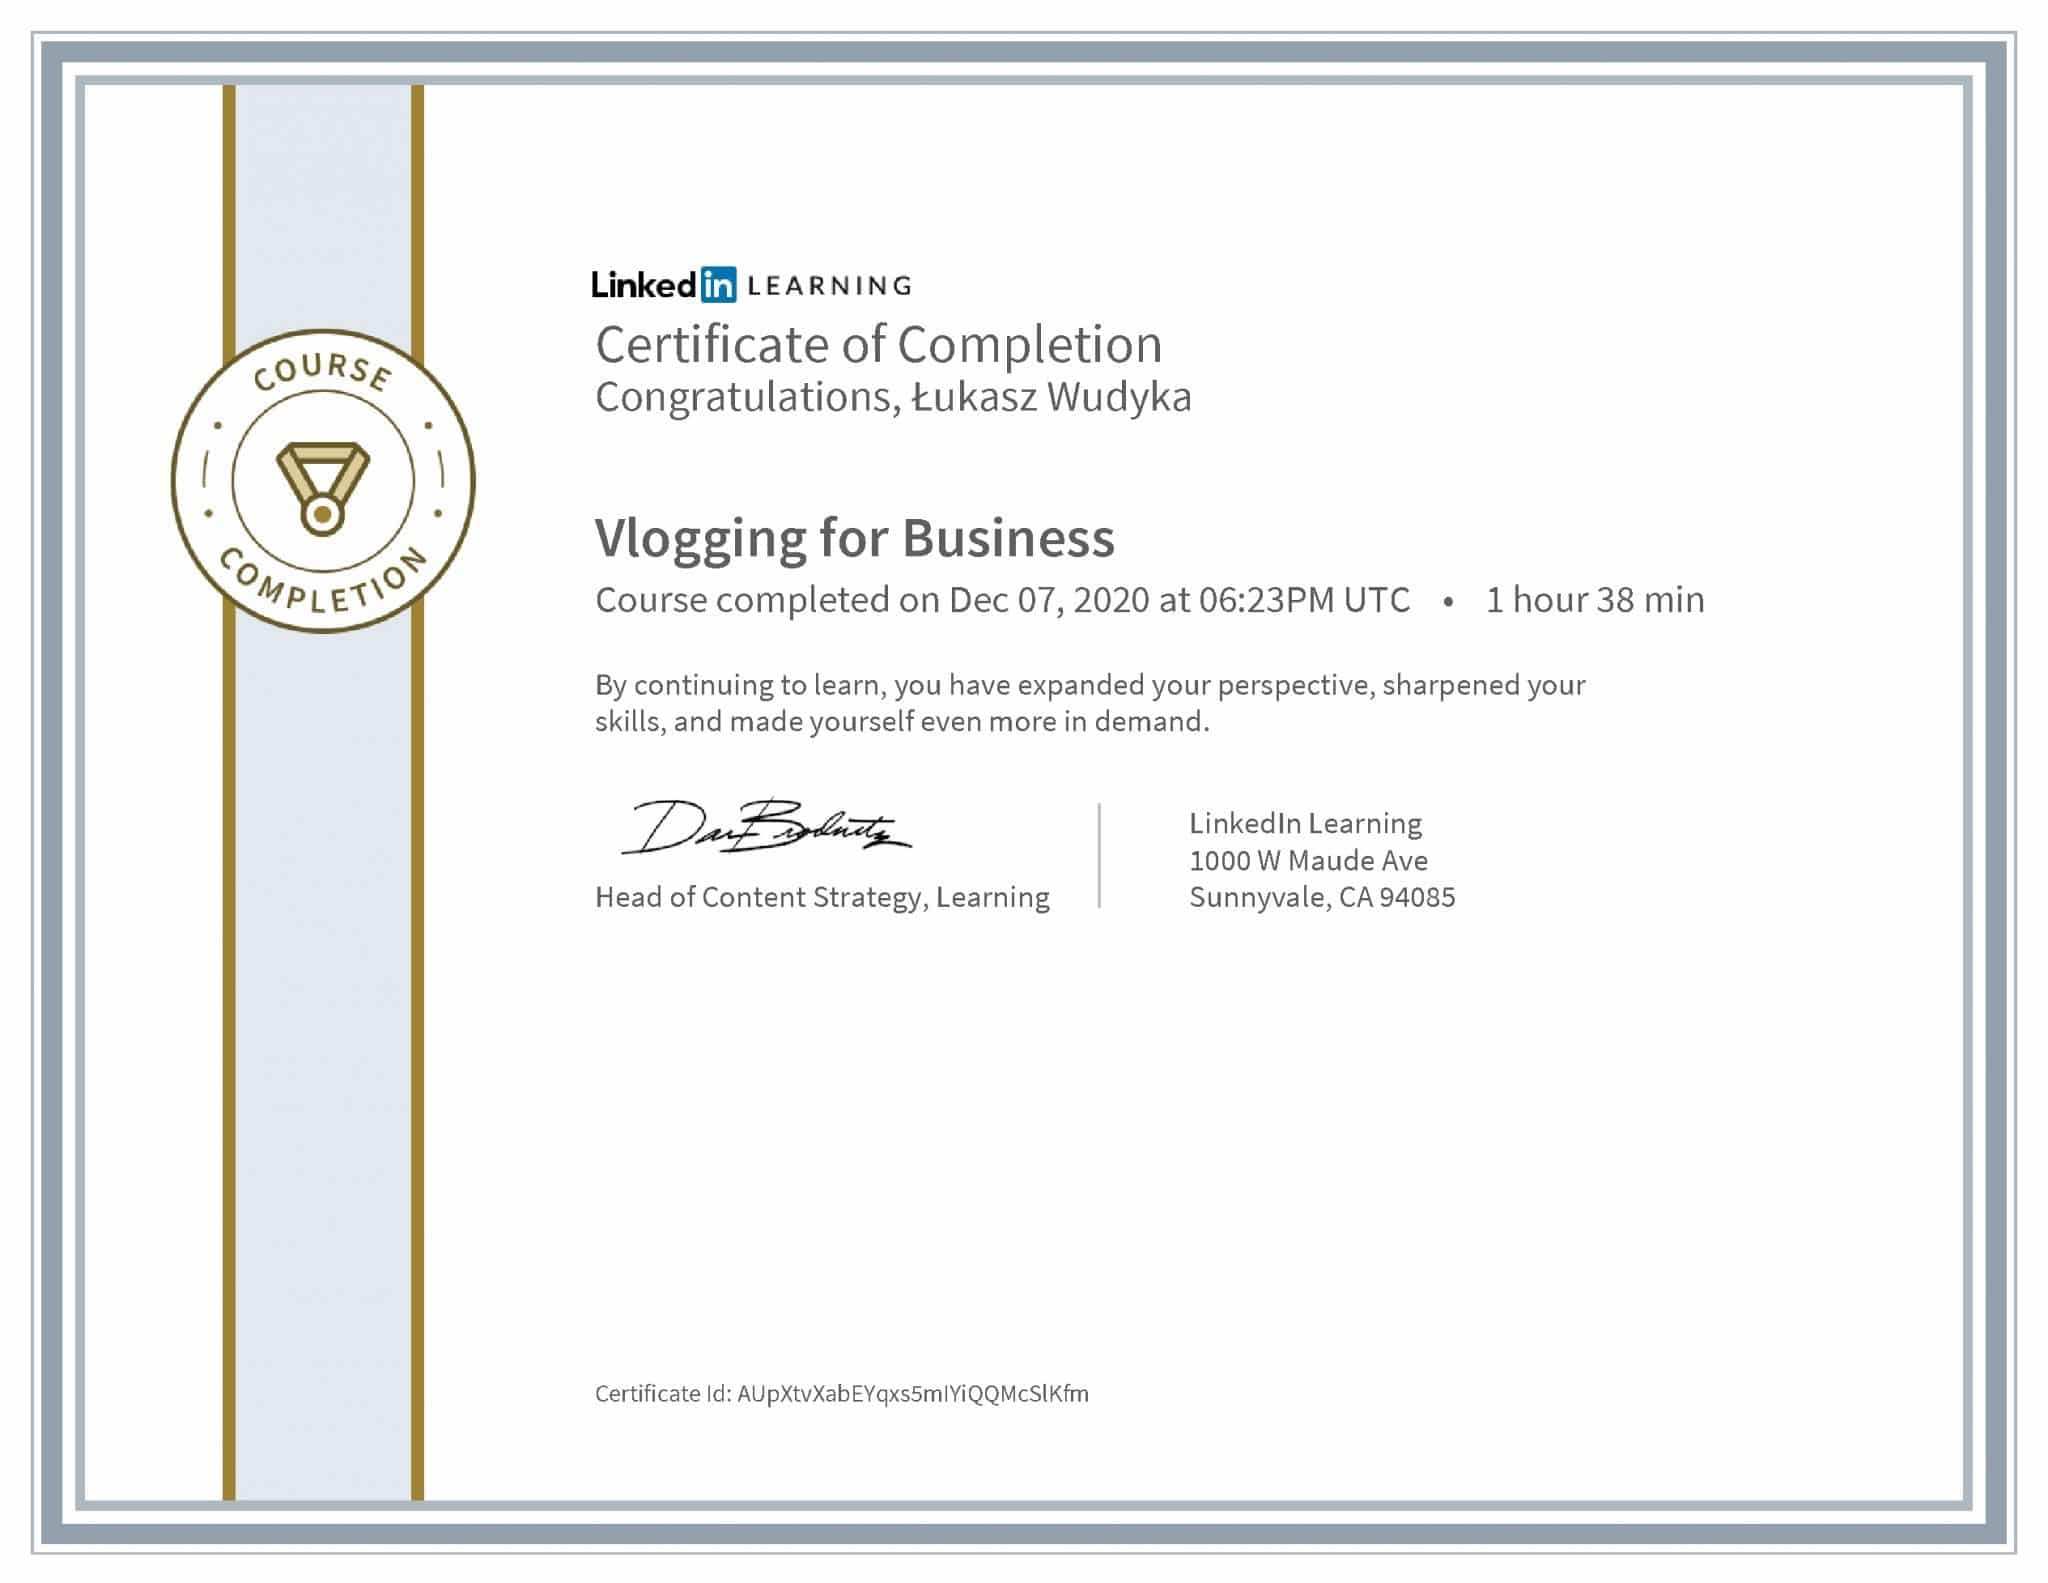 Łukasz Wudyka certyfikat LinkedIn Vlogging for Business